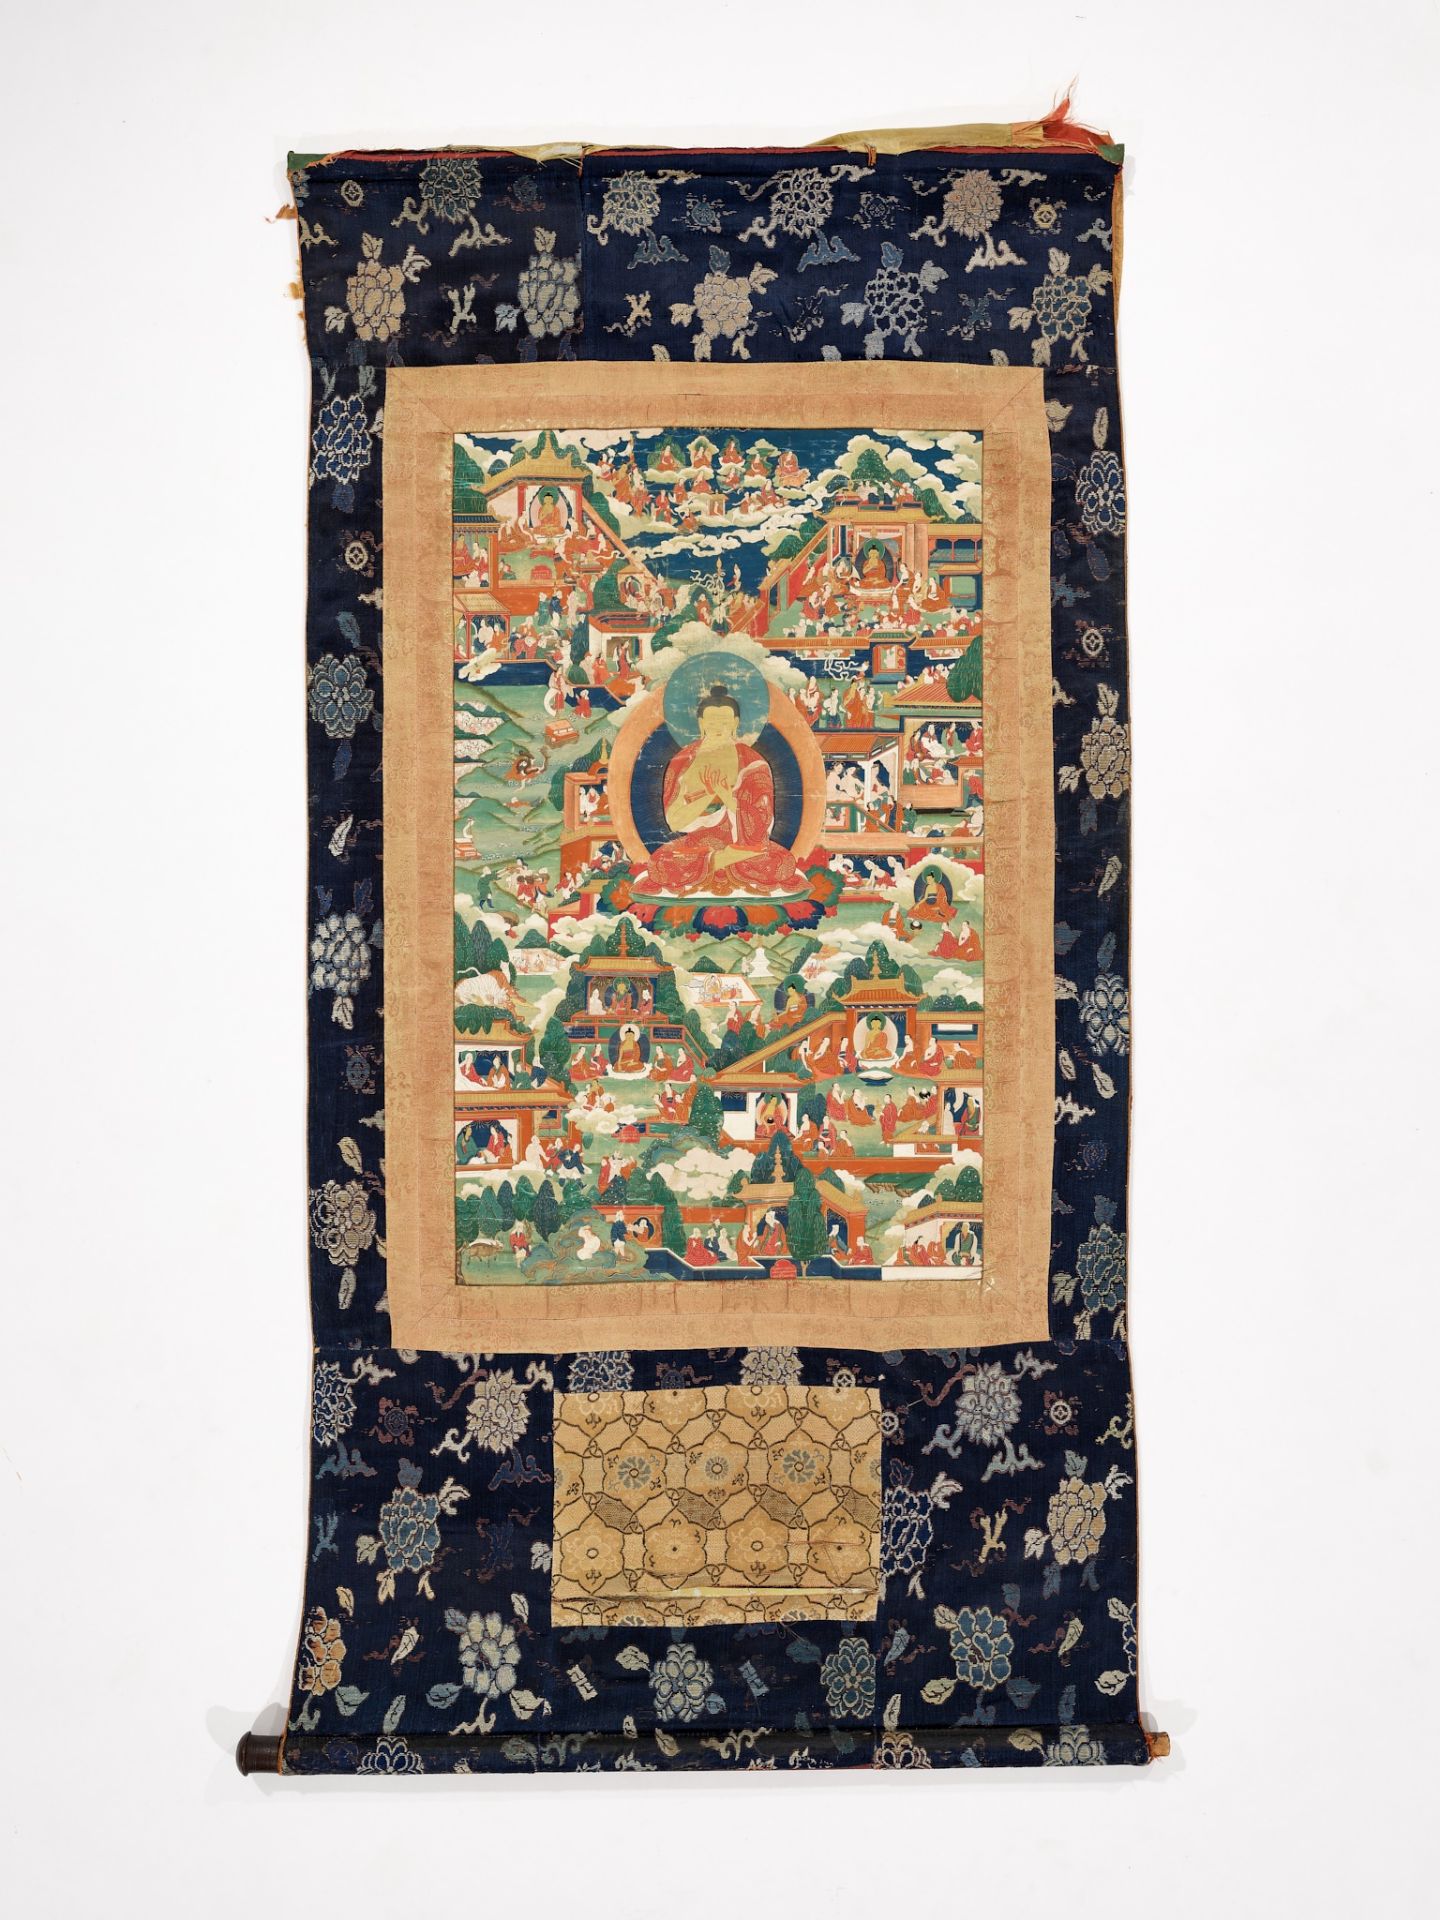 A THANGKA OF BUDDHA SHAKYAMUNI AND CLASSIC BUDDHIST TEACHING STORIES, NEW MENRI STYLE, TIBET,18TH C. - Image 11 of 15